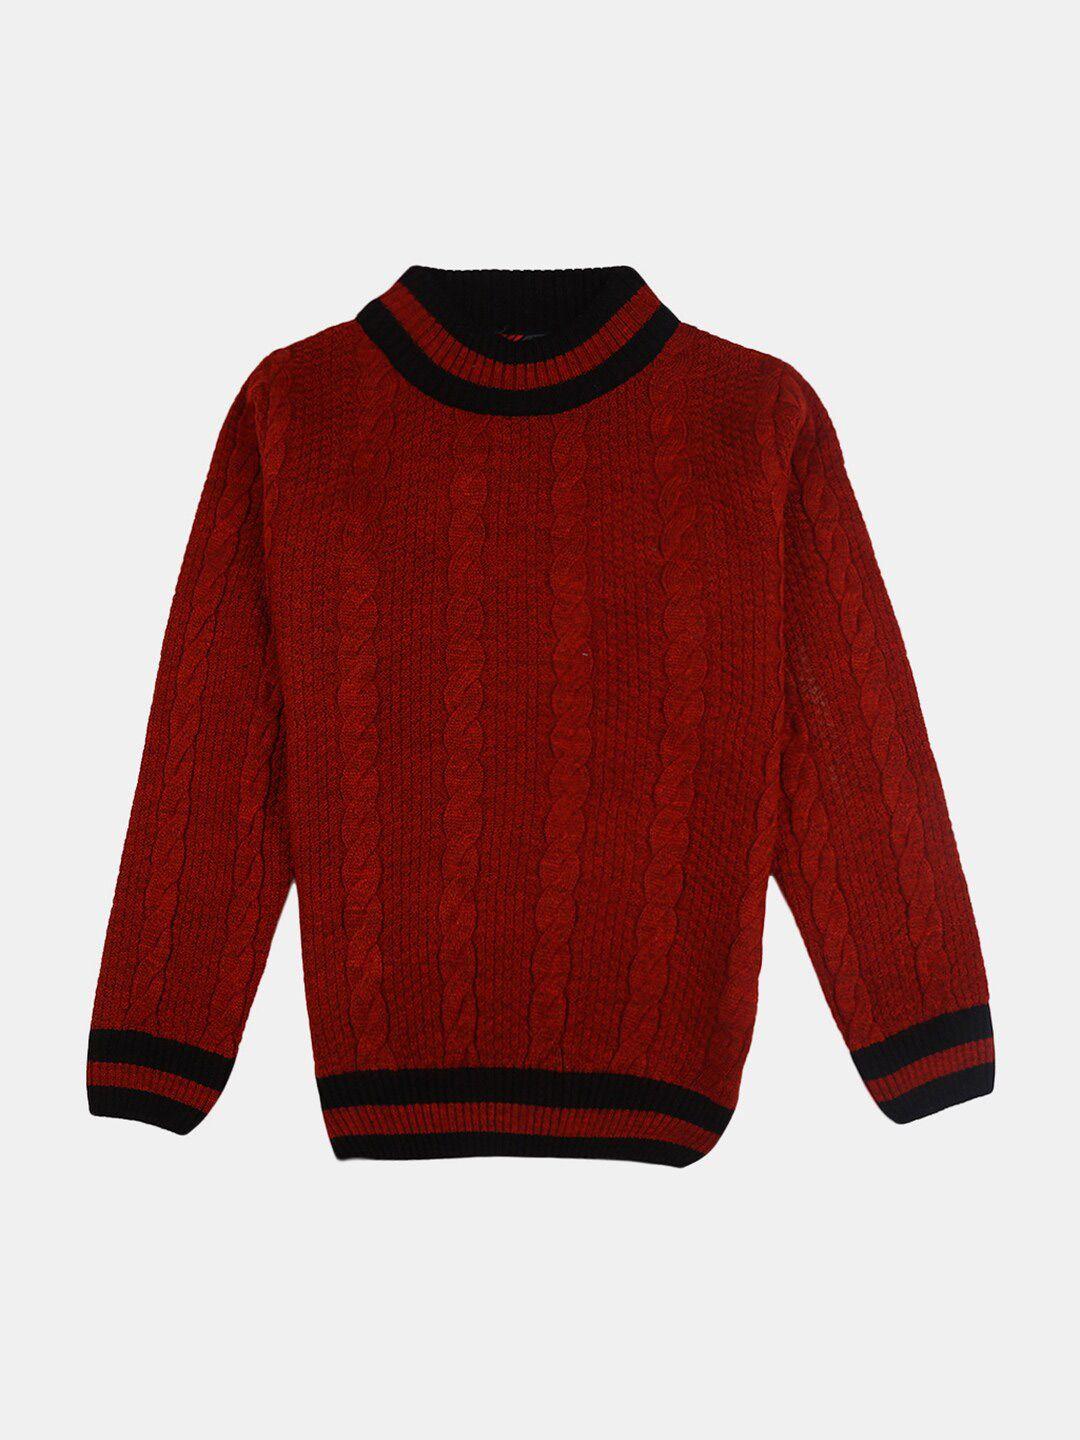 v-mart boys orange & black cable knit cotton pullover sweater